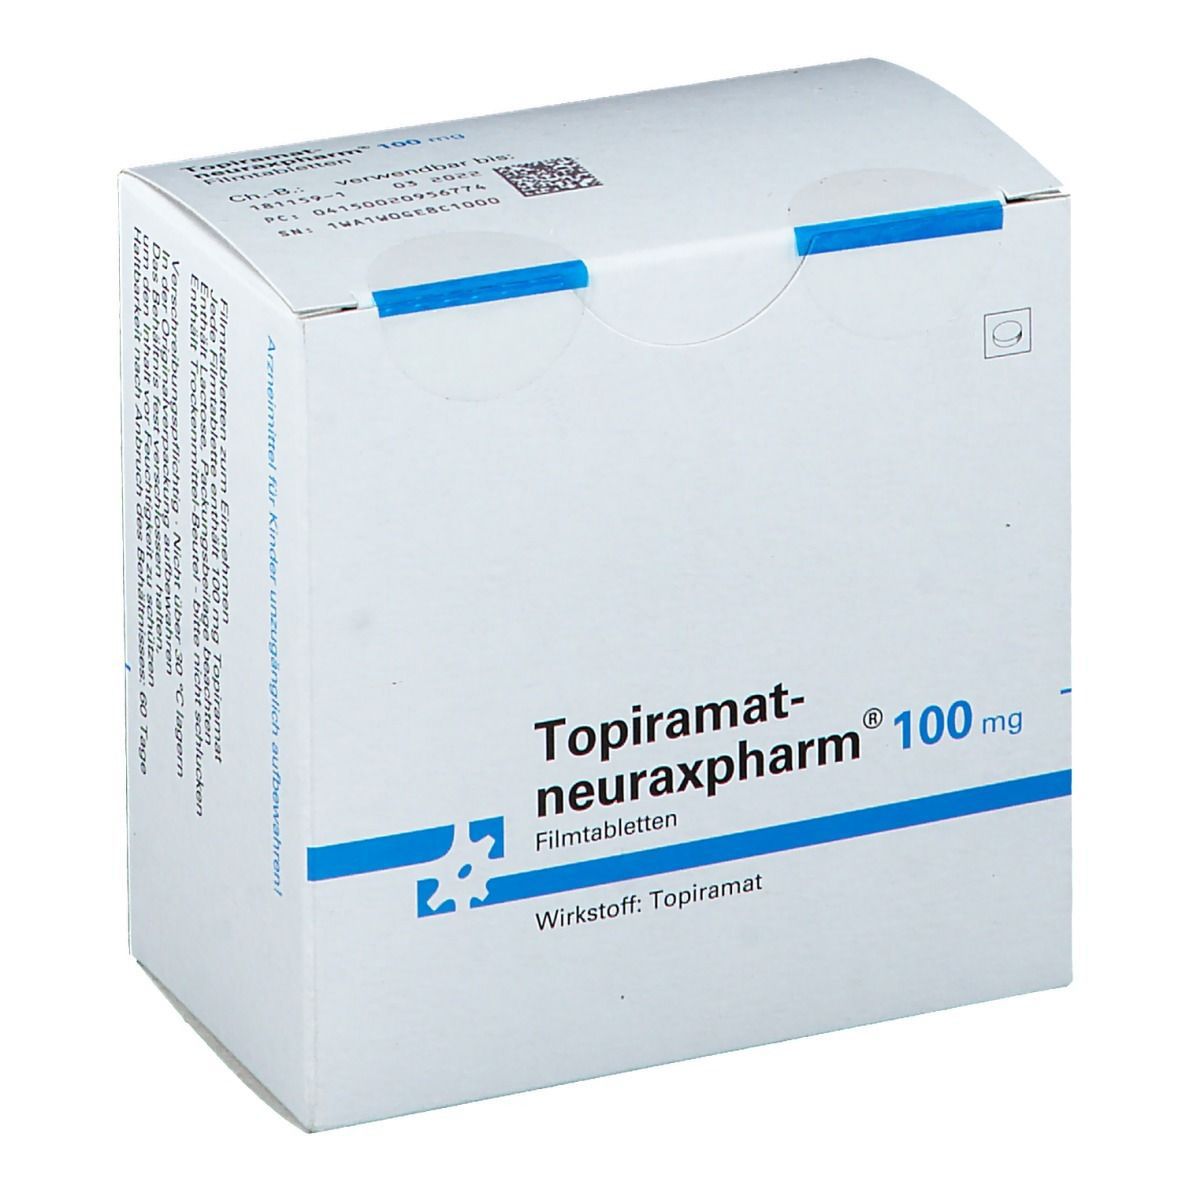 Topiramat-neuraxpharm® 100 mg